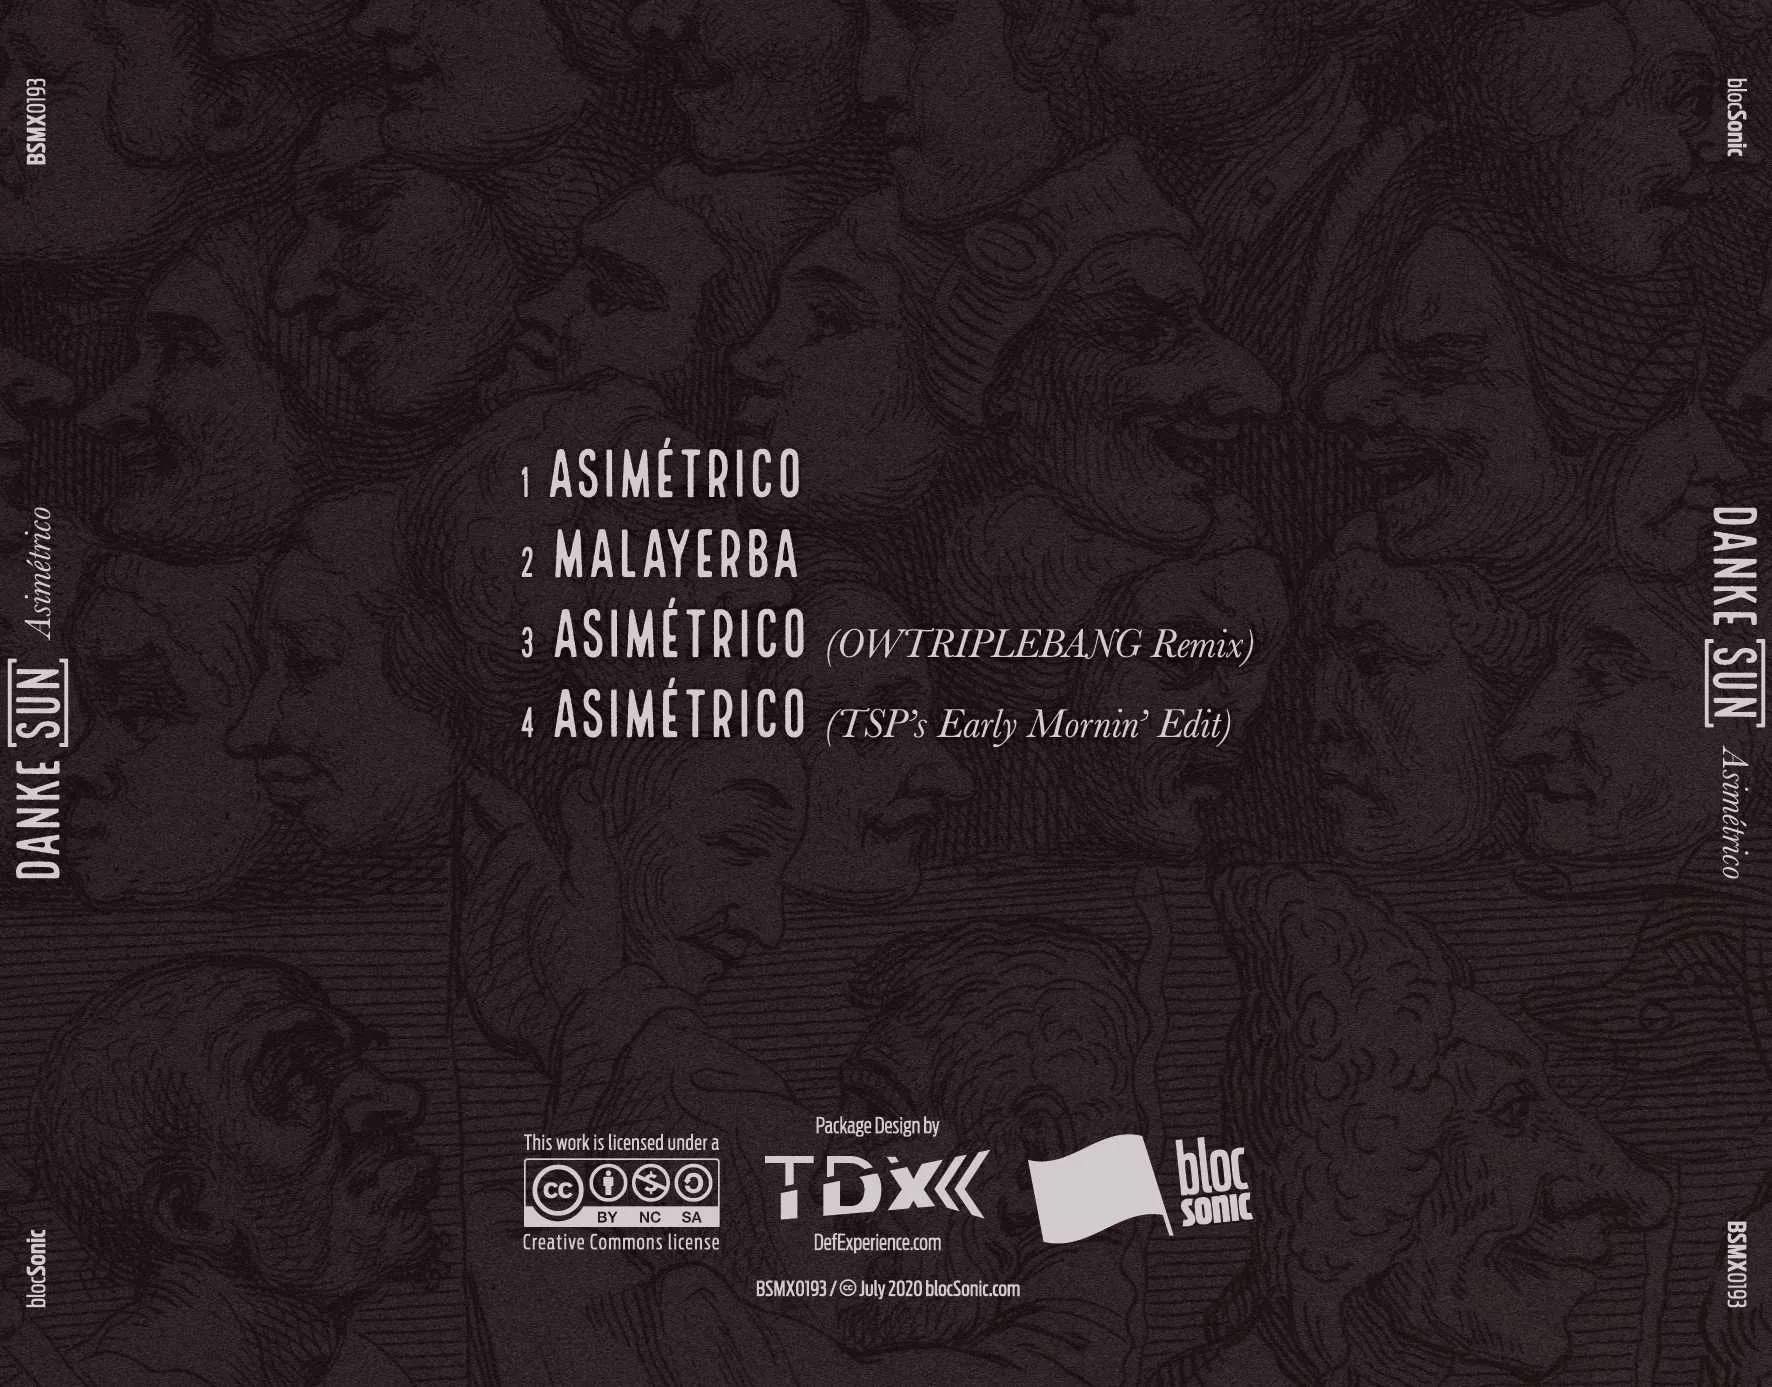 Album traycard for “Asimétrico” by Danke Sun